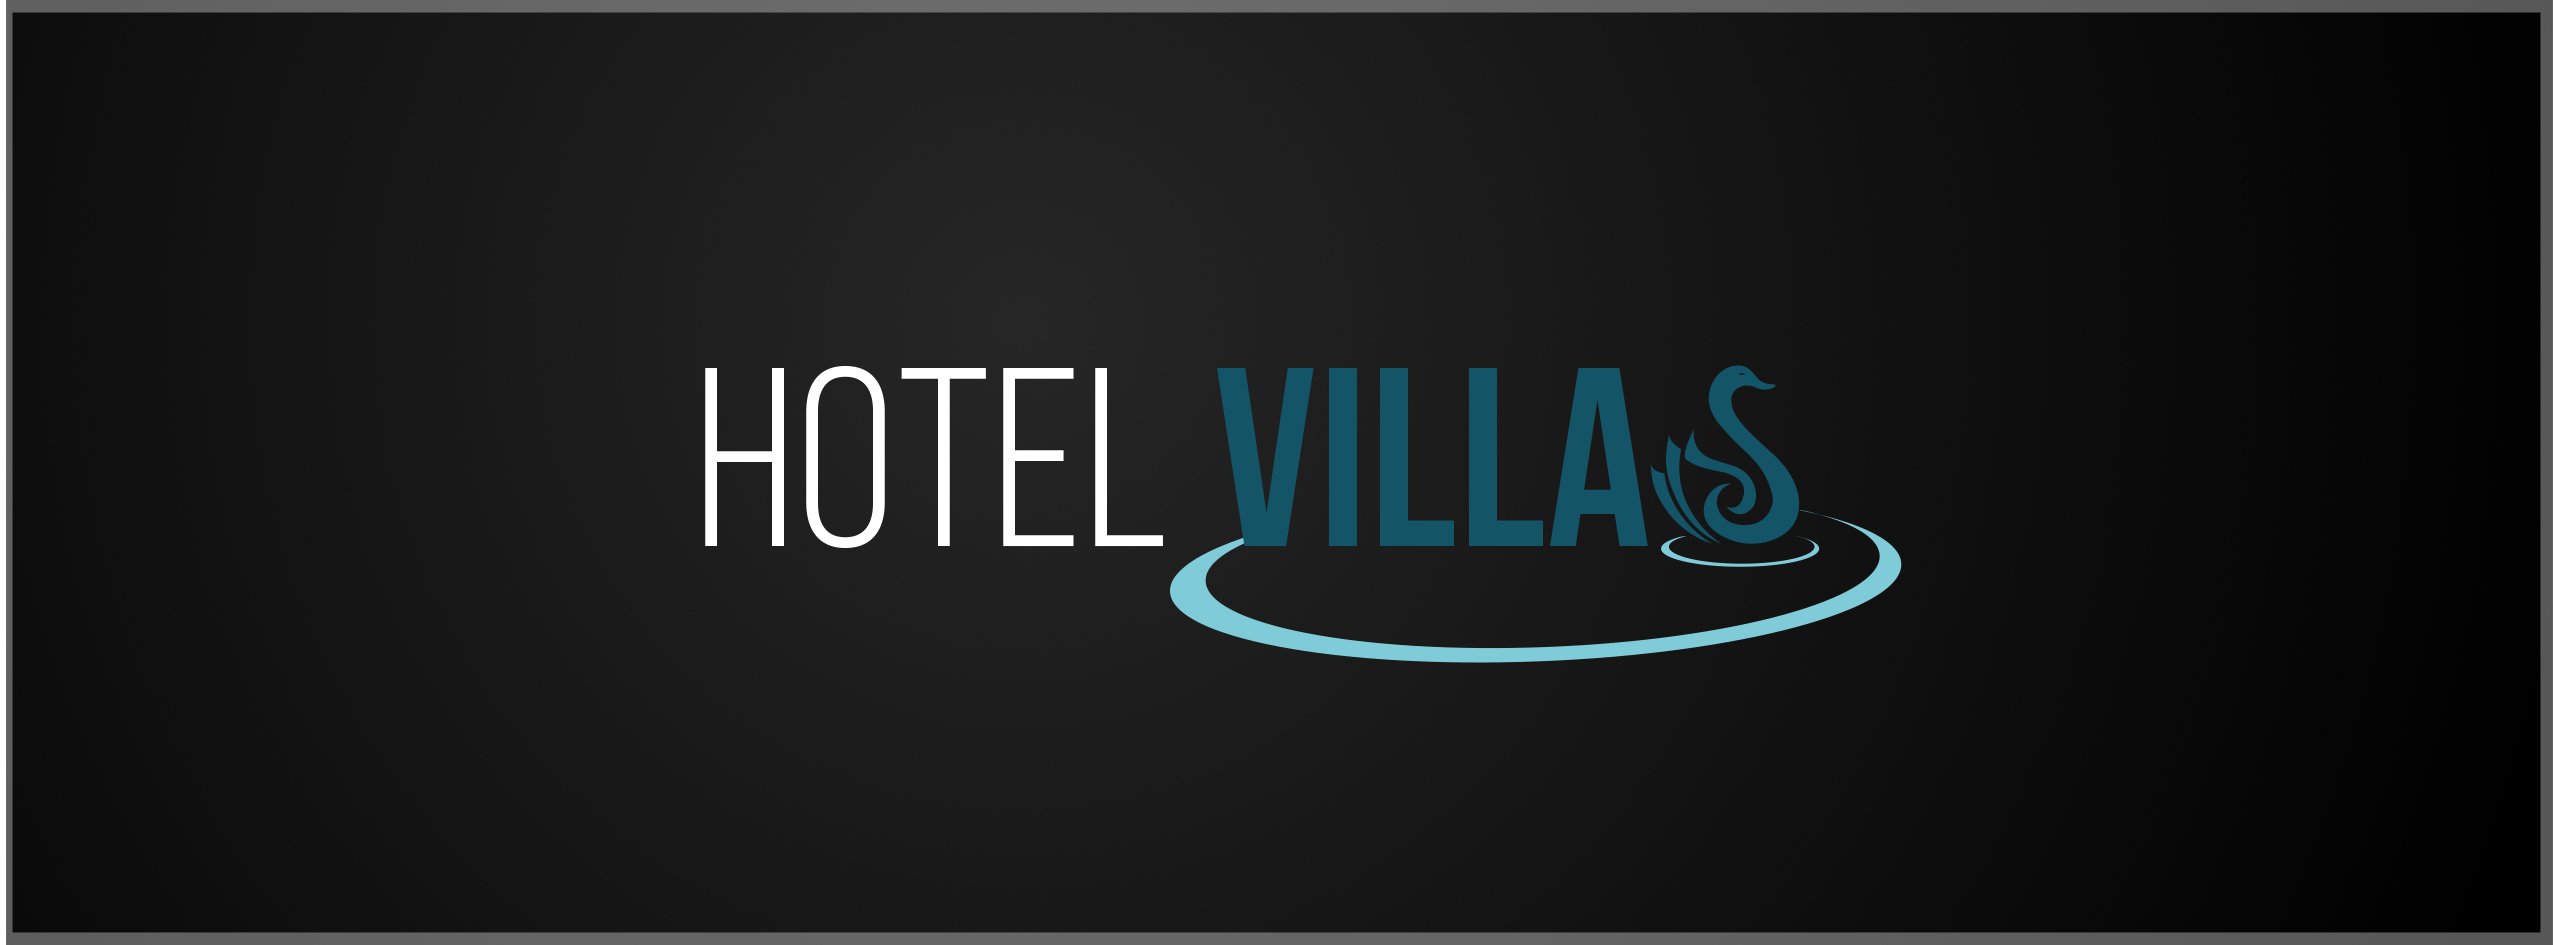 HOTELVİLLAS logo-3 white